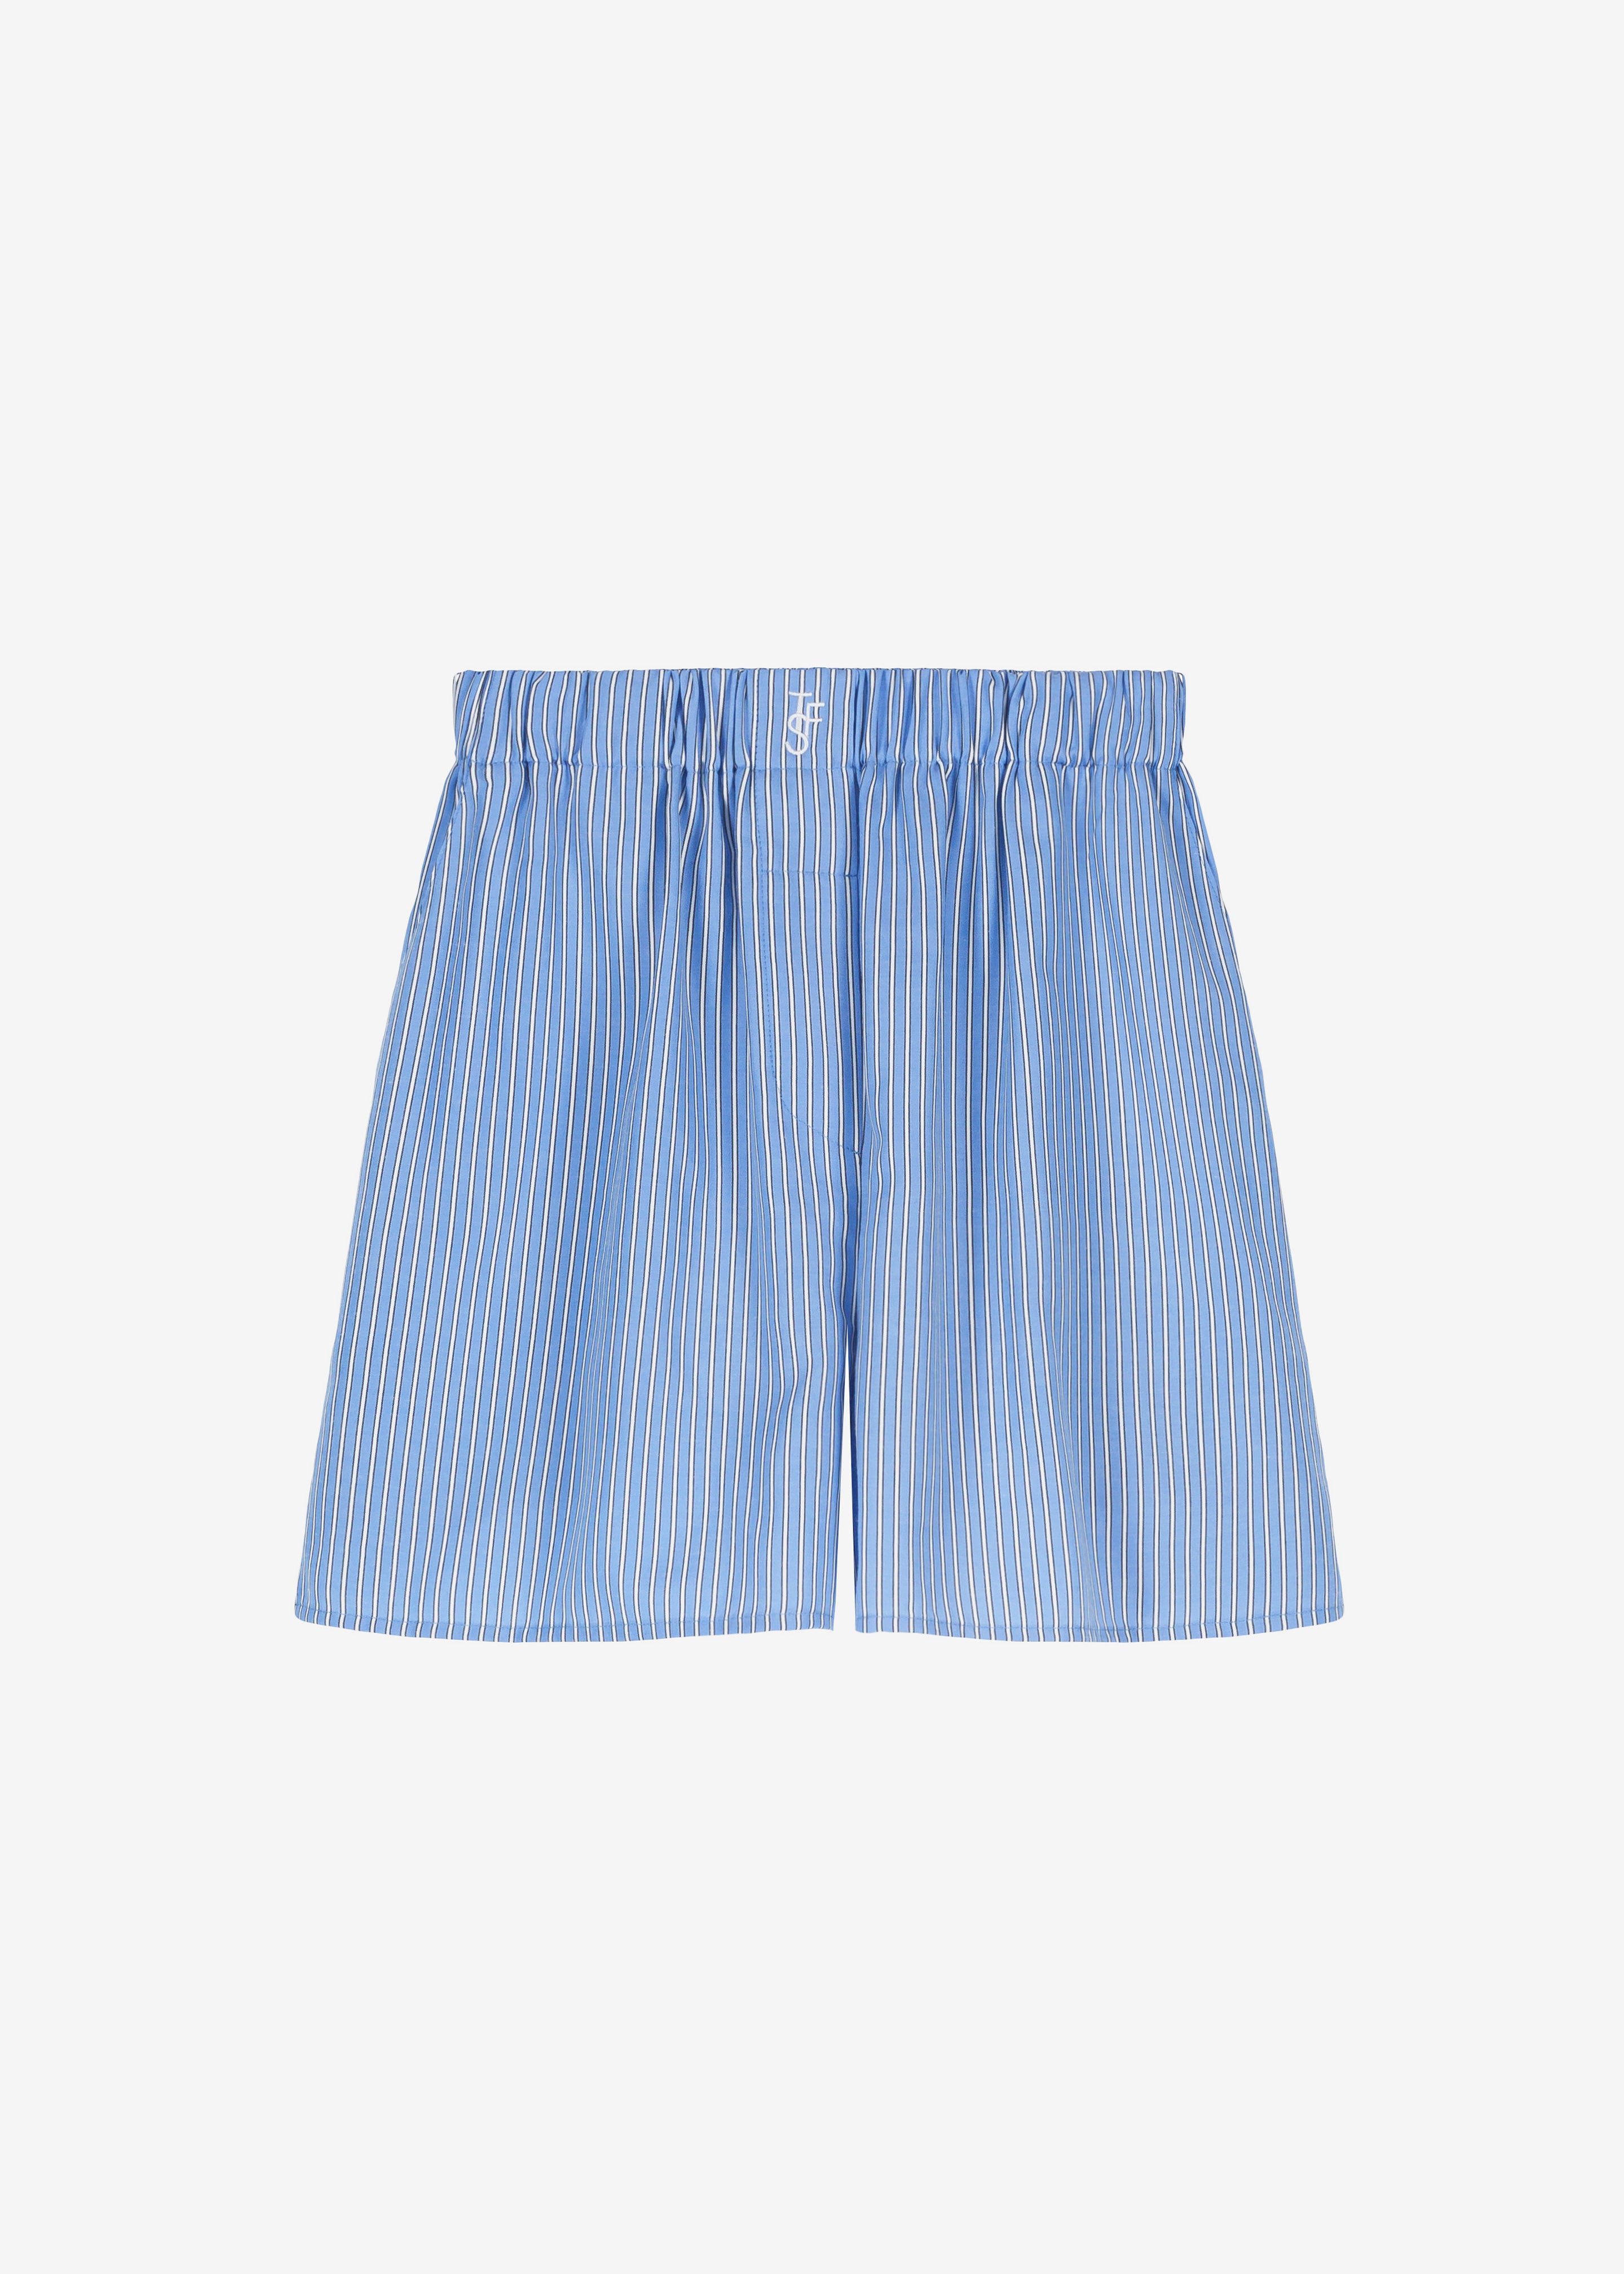 Lui Oxford Boxer Shorts - Light Blue/Black Stripe